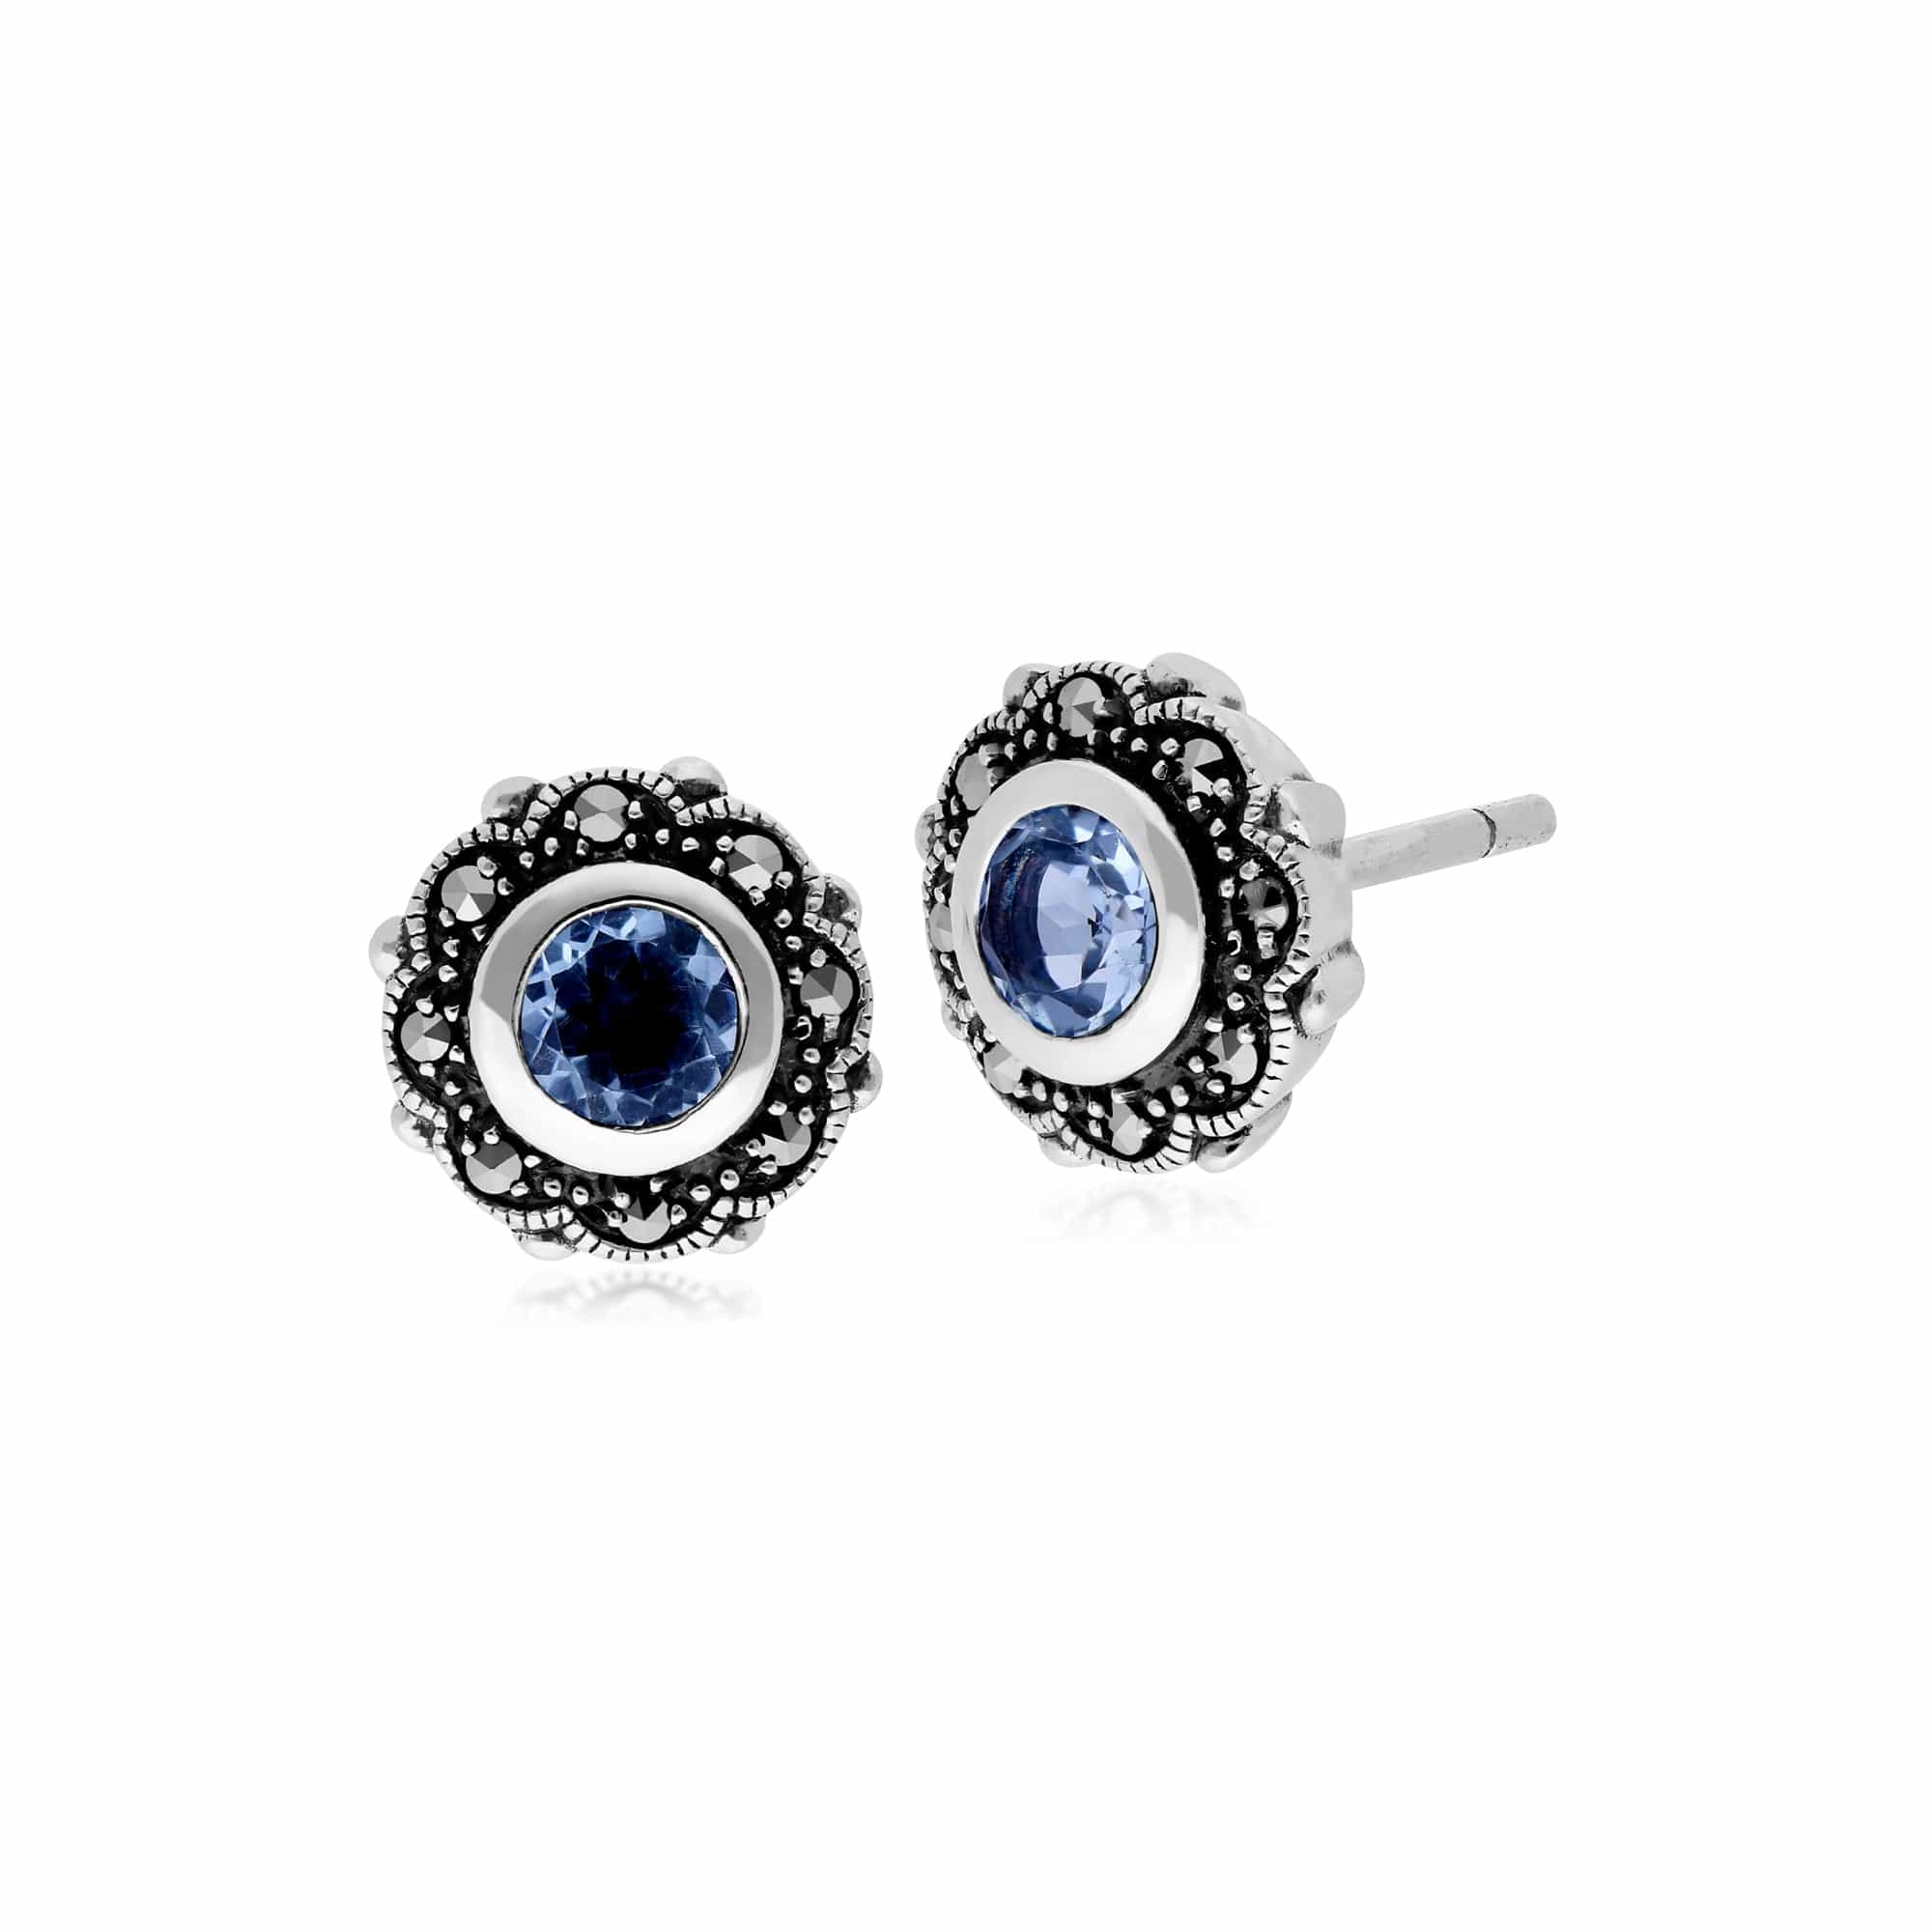 Art Nouveau Style Round Blue Topaz & Marcasite Floral Stud Earrings in 925 Sterling Silver - Gemondo